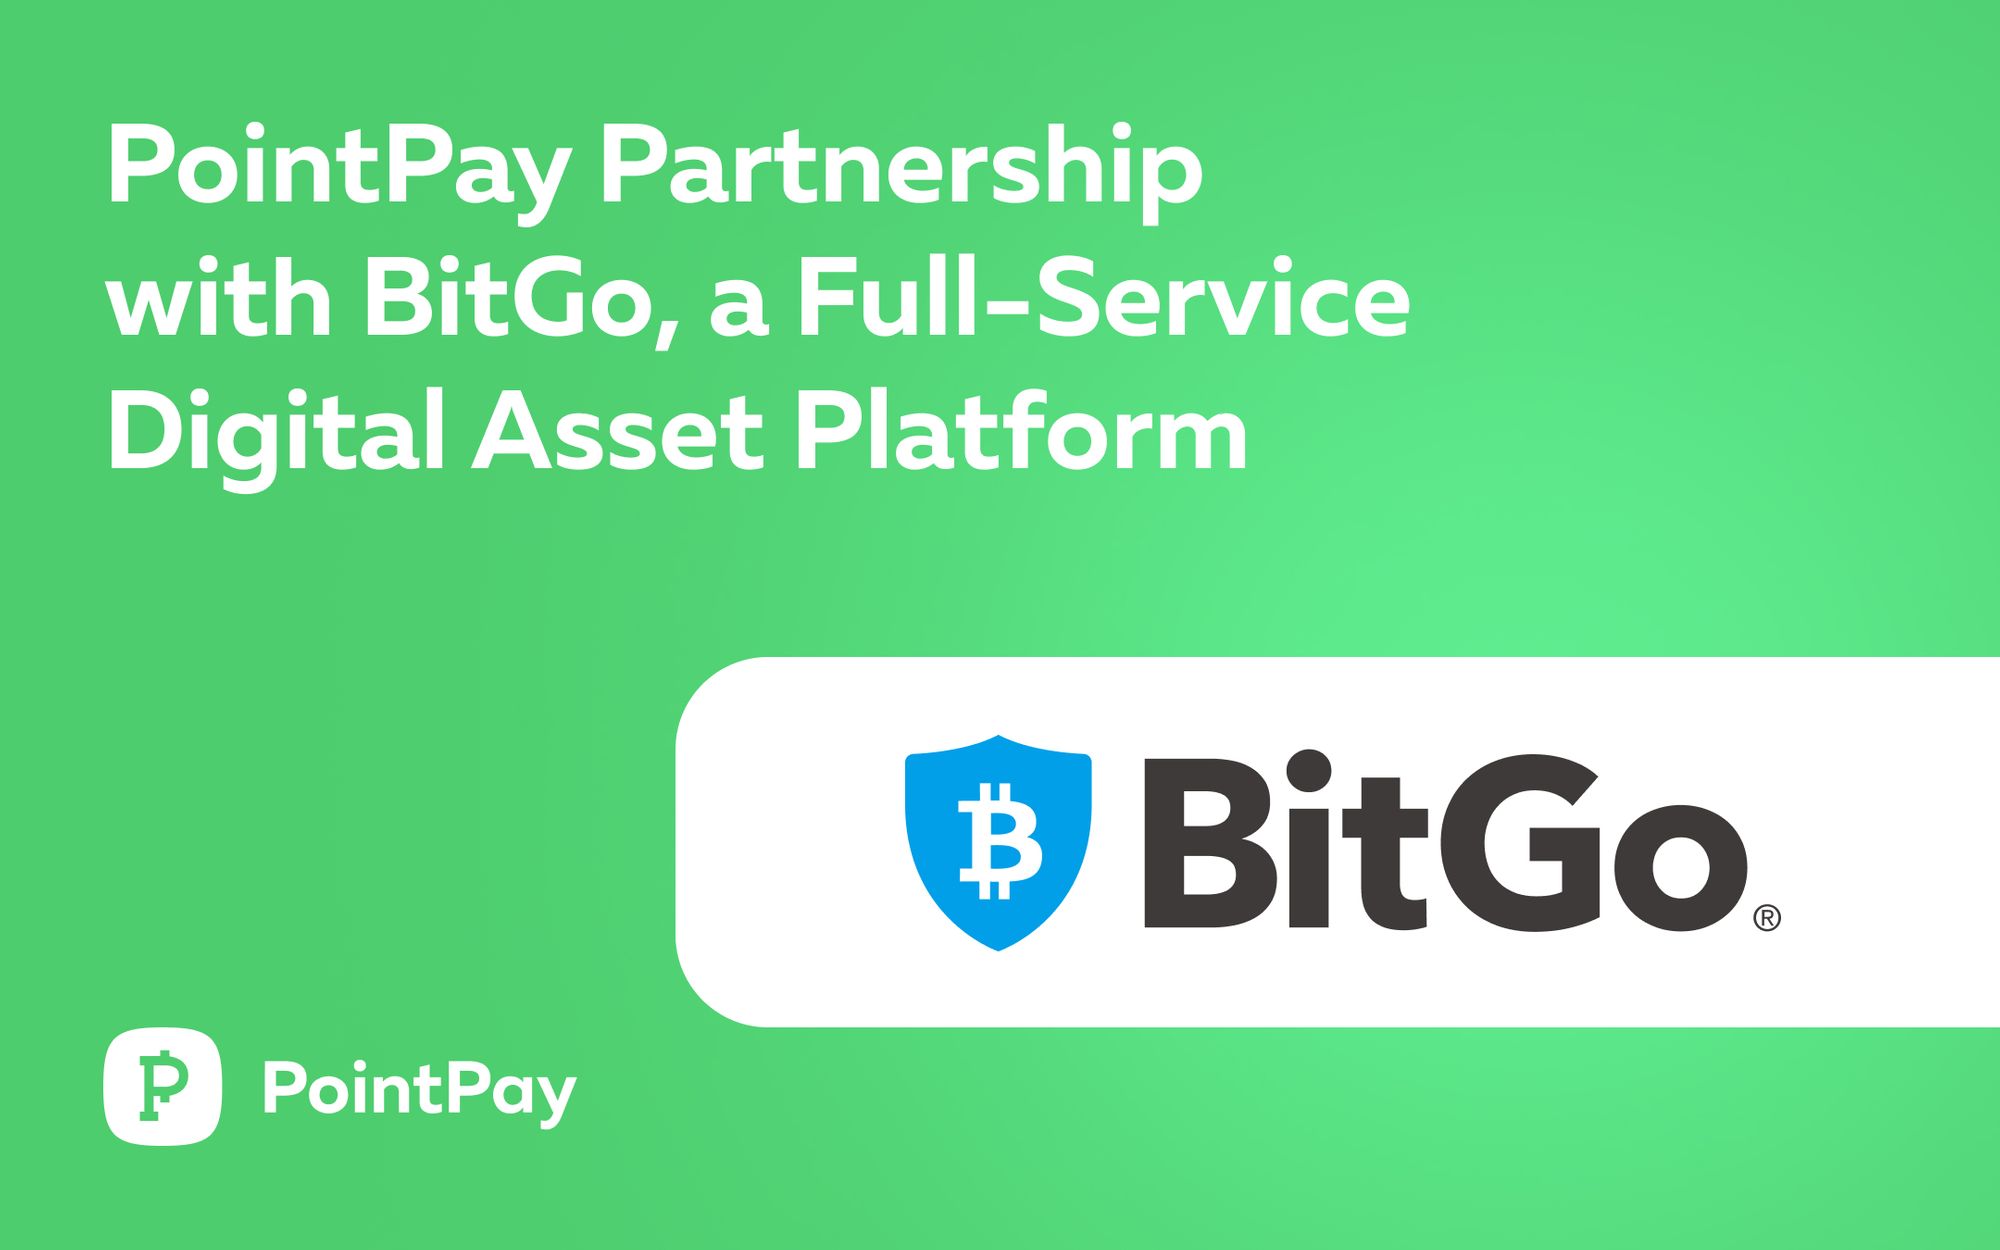 PointPay partners with BitGo, a Full-Service Digital Asset Platform